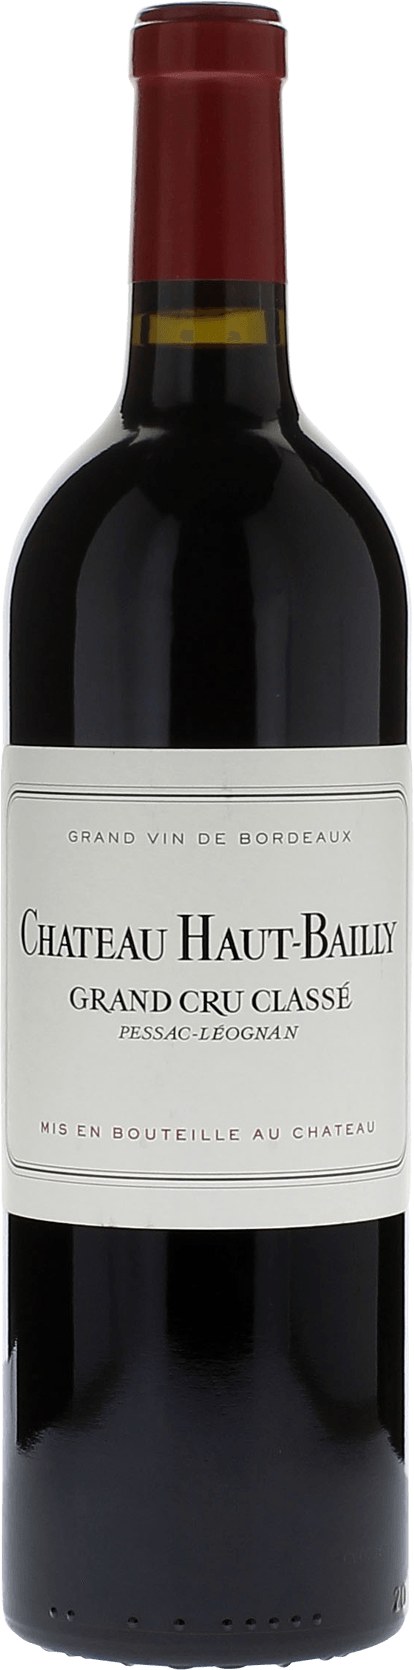 Haut bailly 2018 cru class Pessac-Lognan, Bordeaux rouge